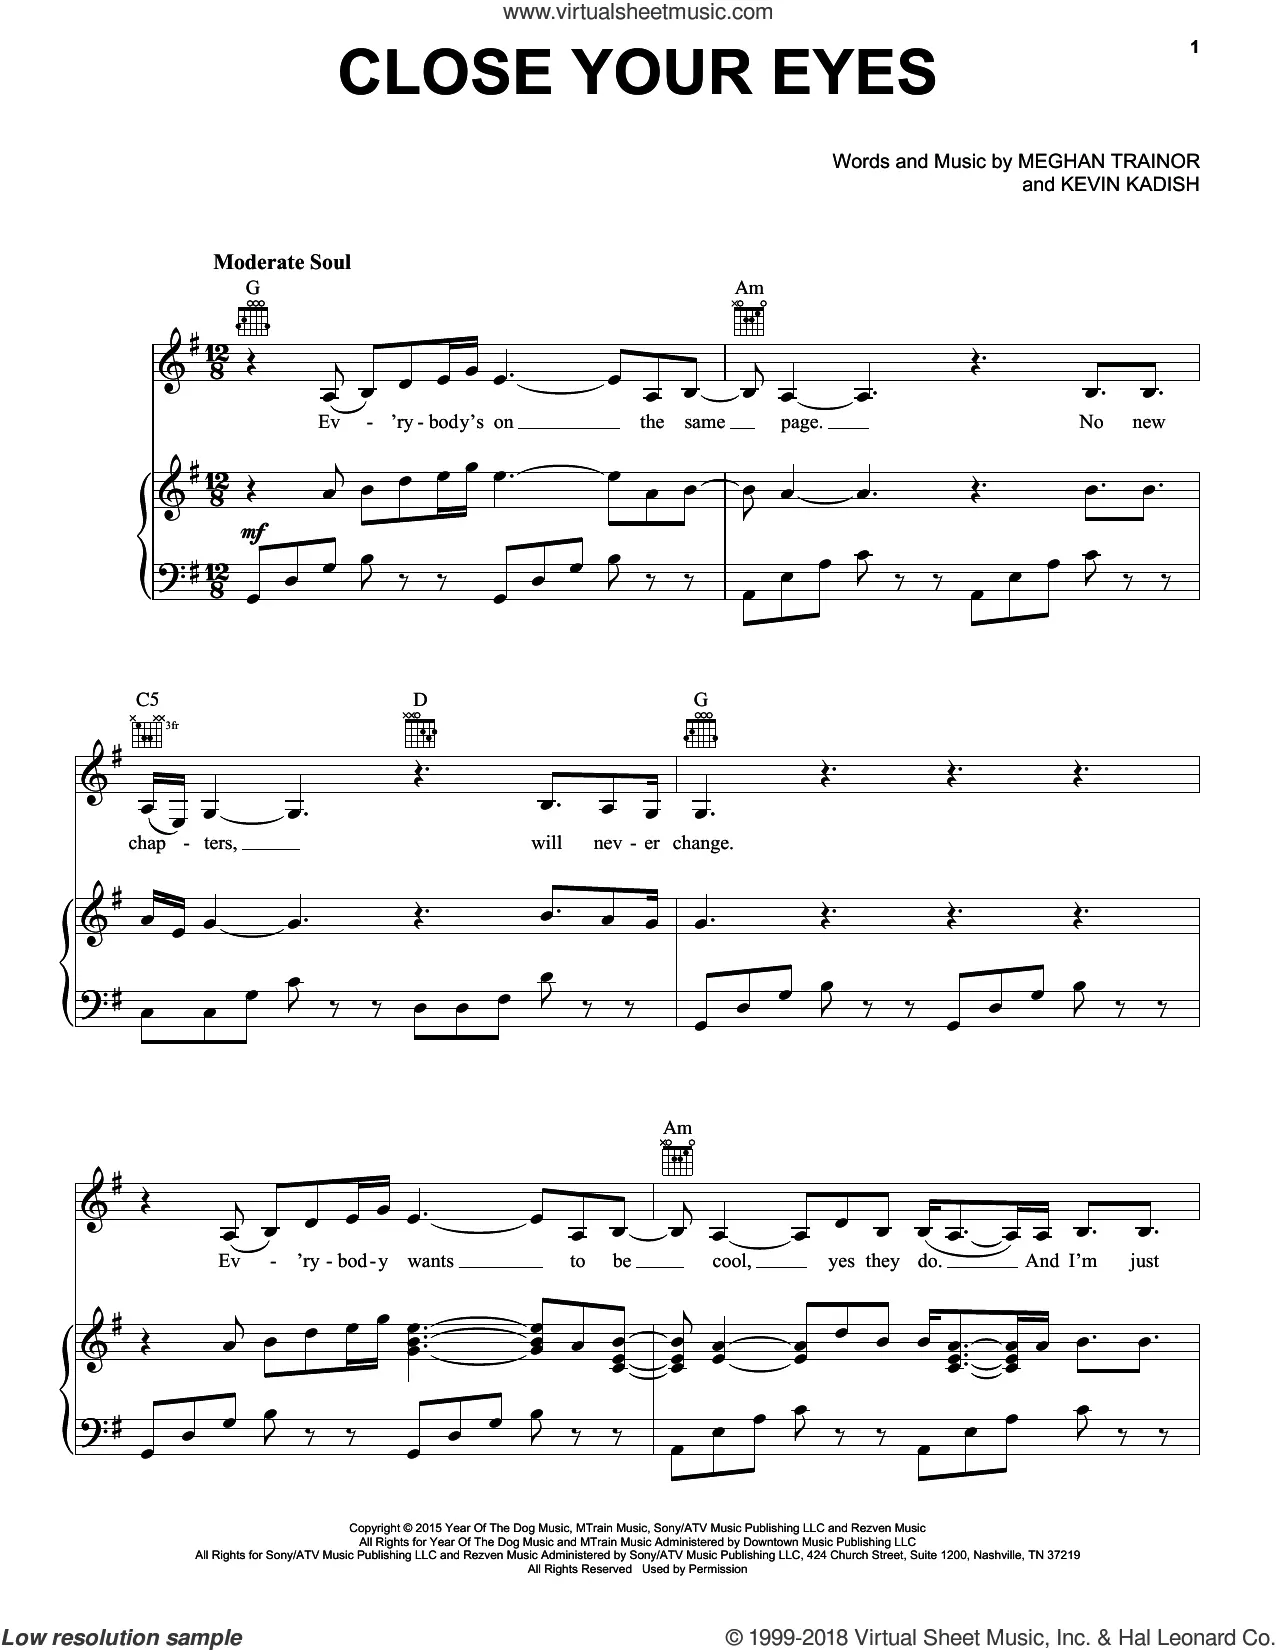 Meghan Trainor Made You Look - Eb Instrument Sheet Music (Alto or  Baritone Saxophone) in C Major - Download & Print - SKU: MN0267720